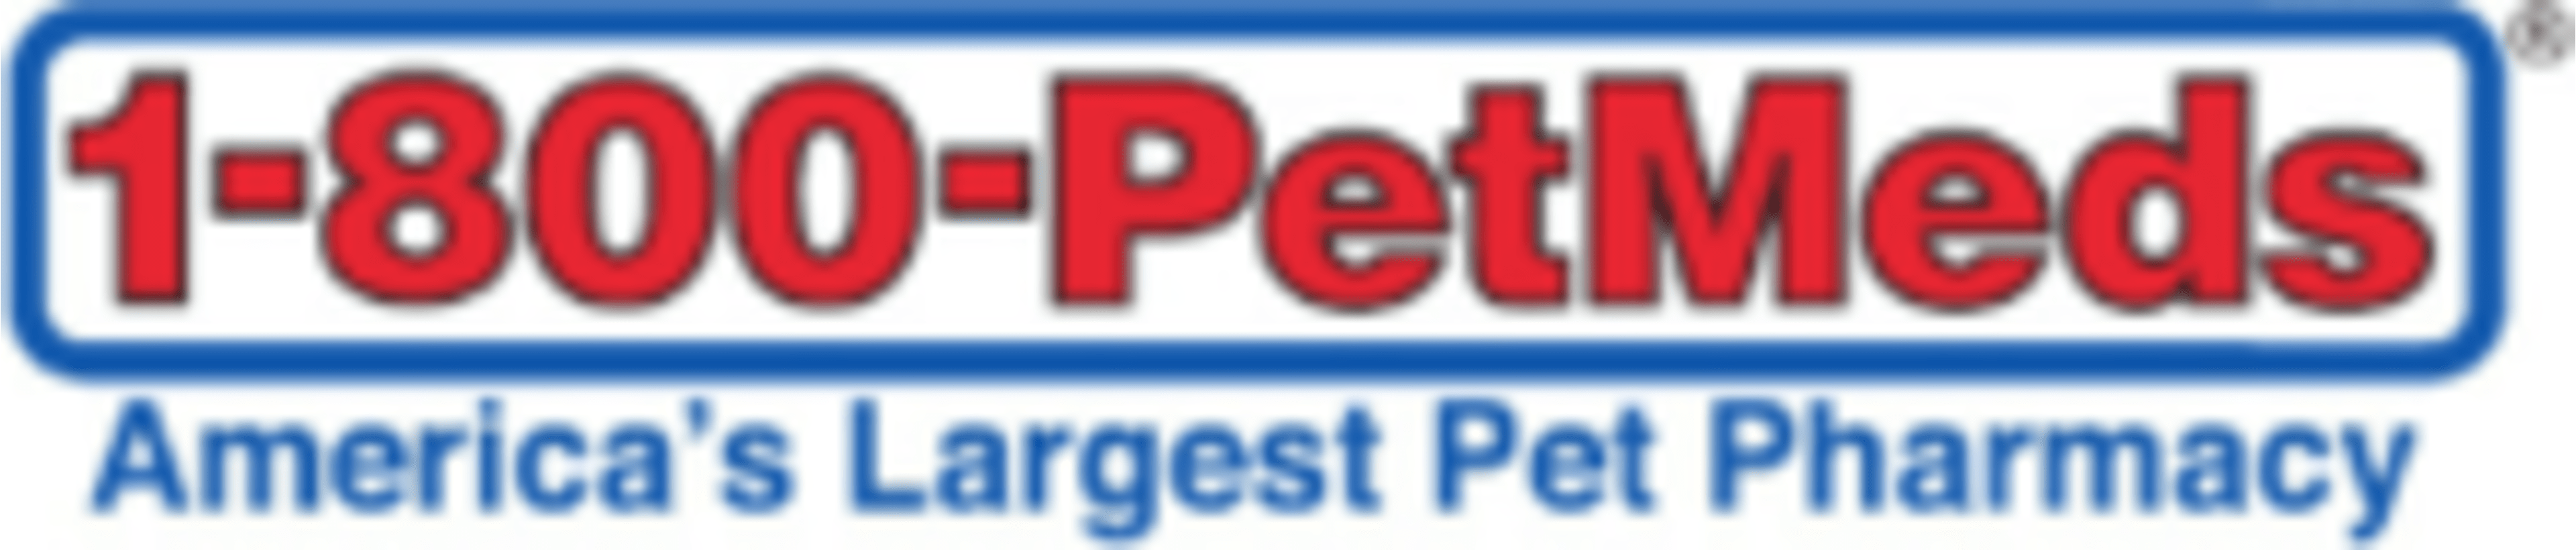 1-800-PetMeds Code